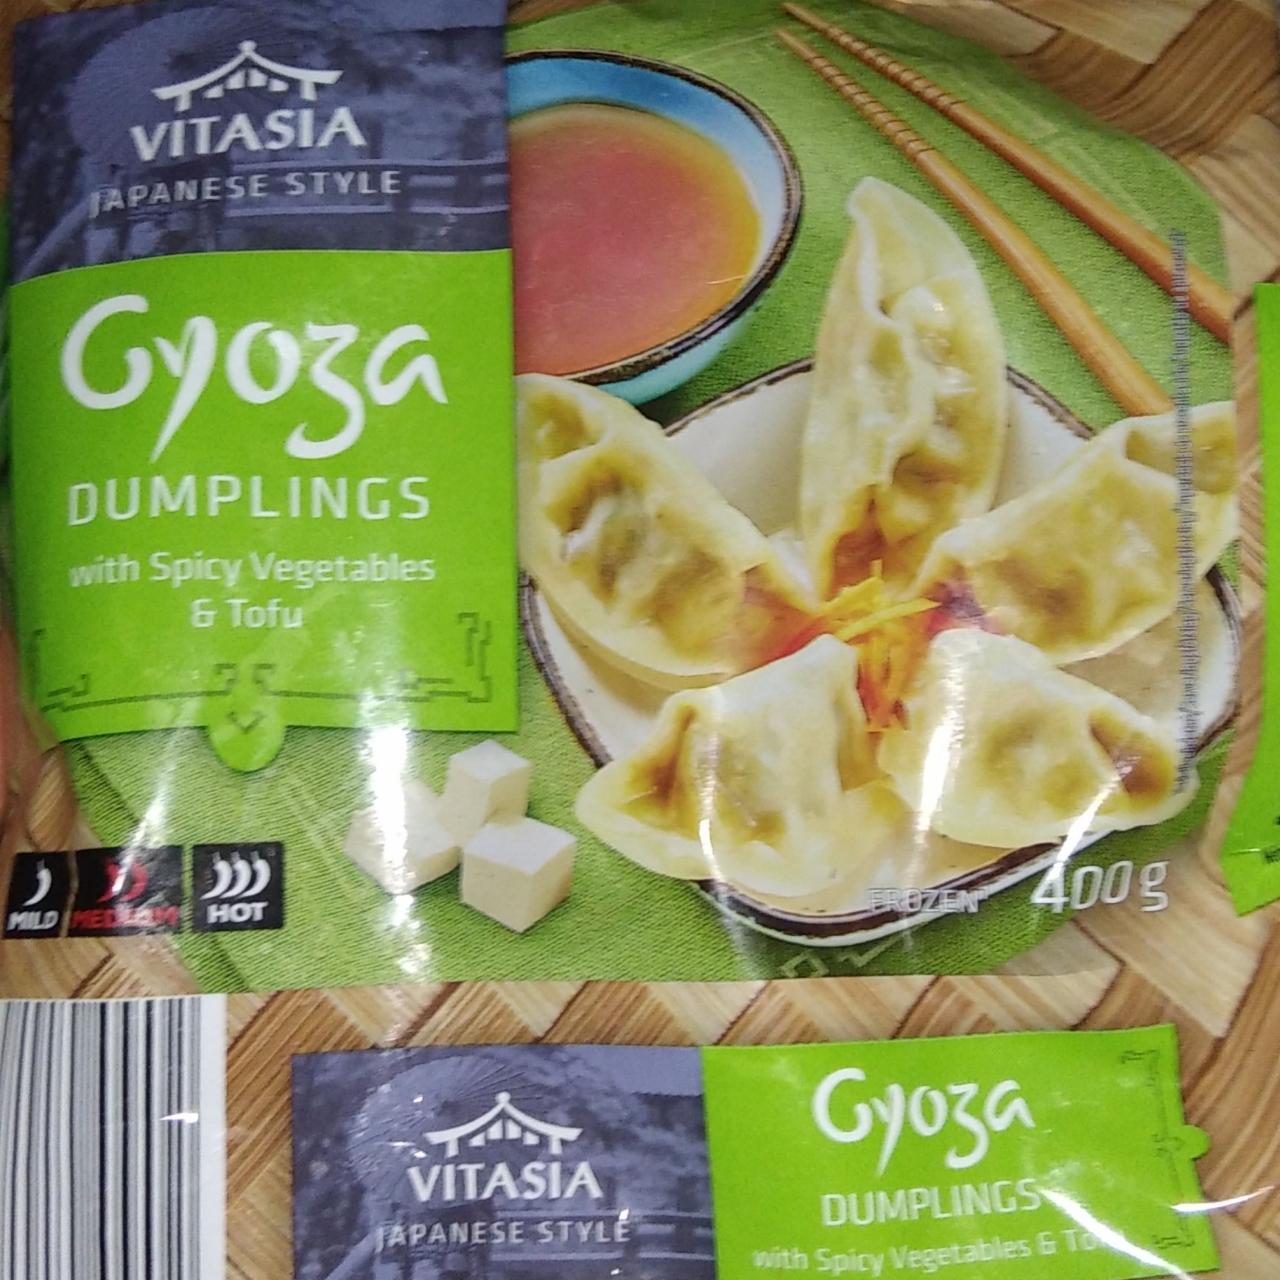 Fotografie - Gyoza dumplings with Spicy Vegetables & Tofu Vitasia